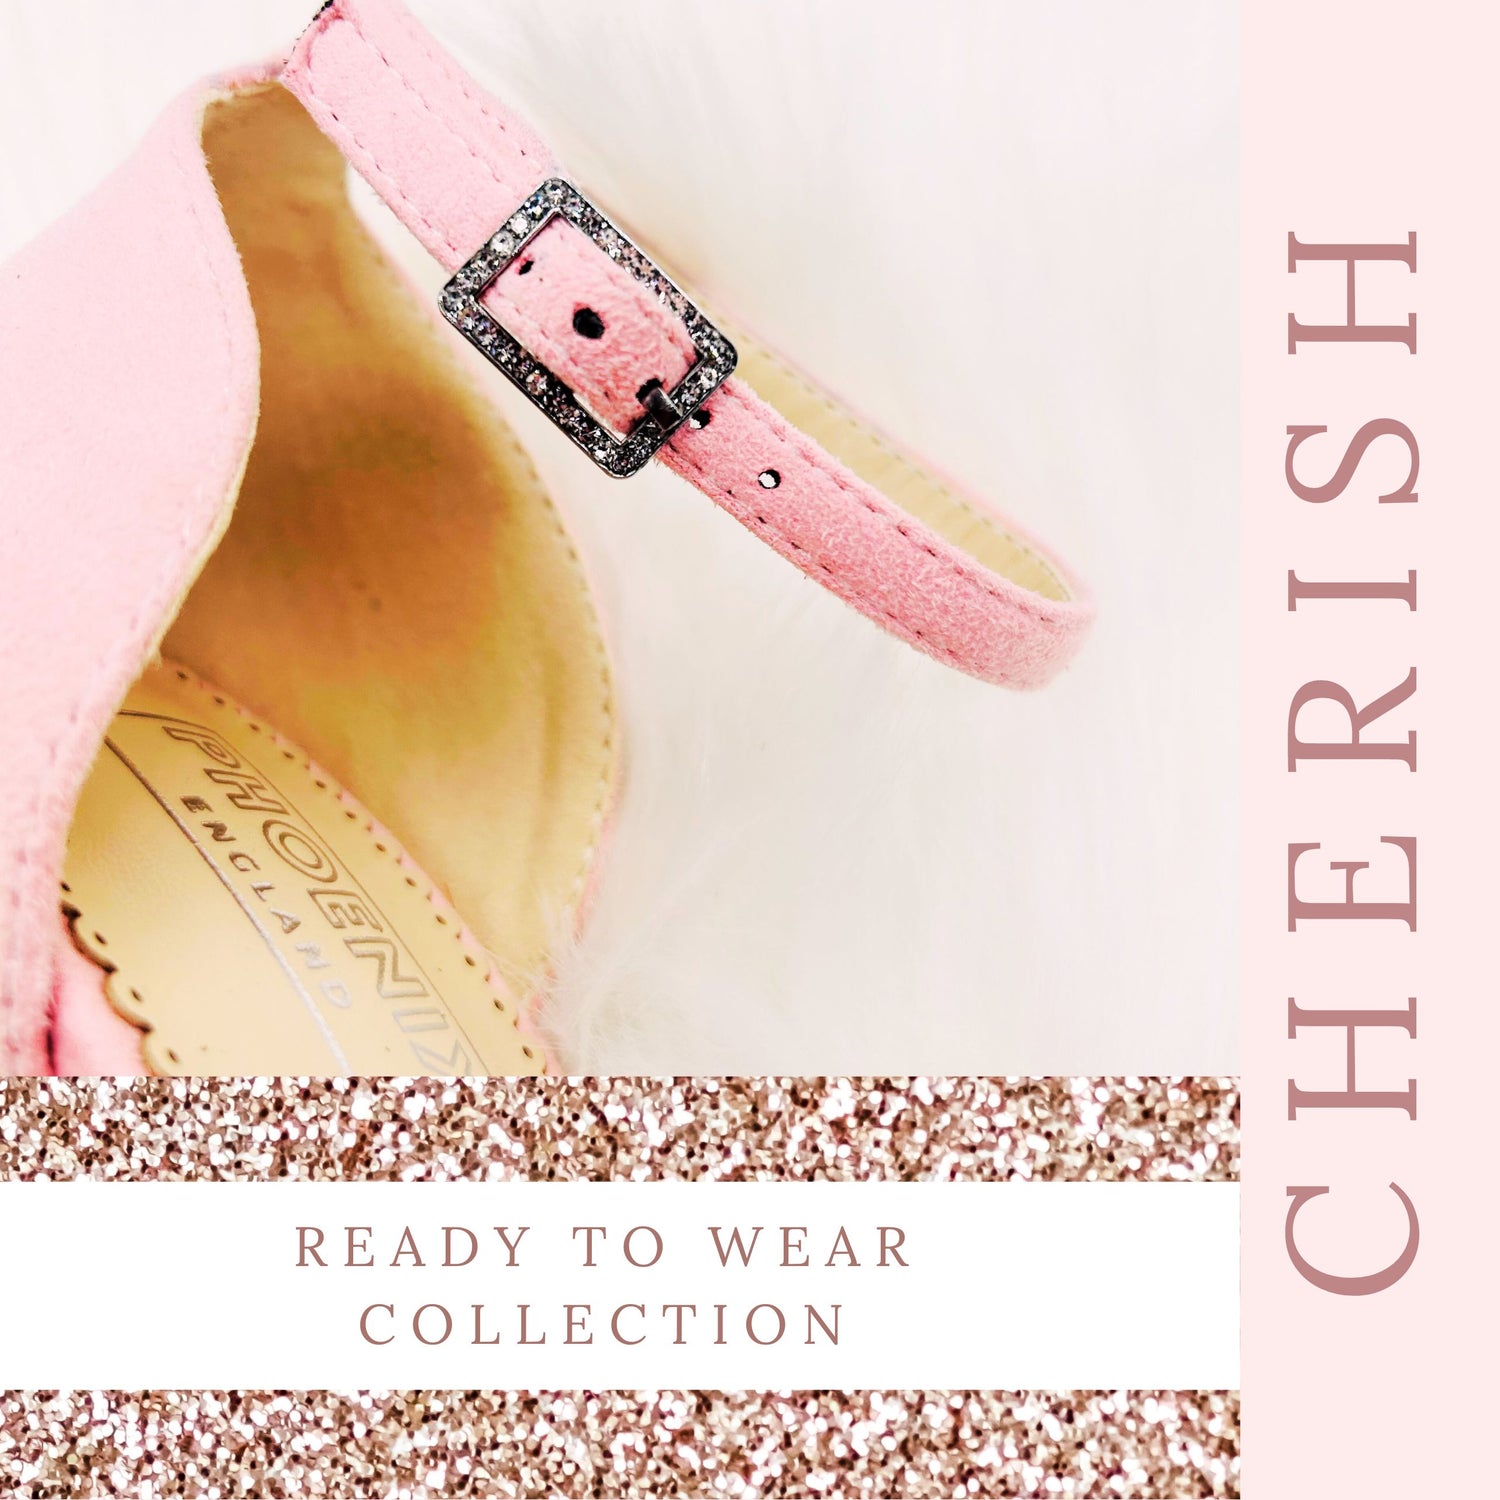 blush-heels-for-wedding